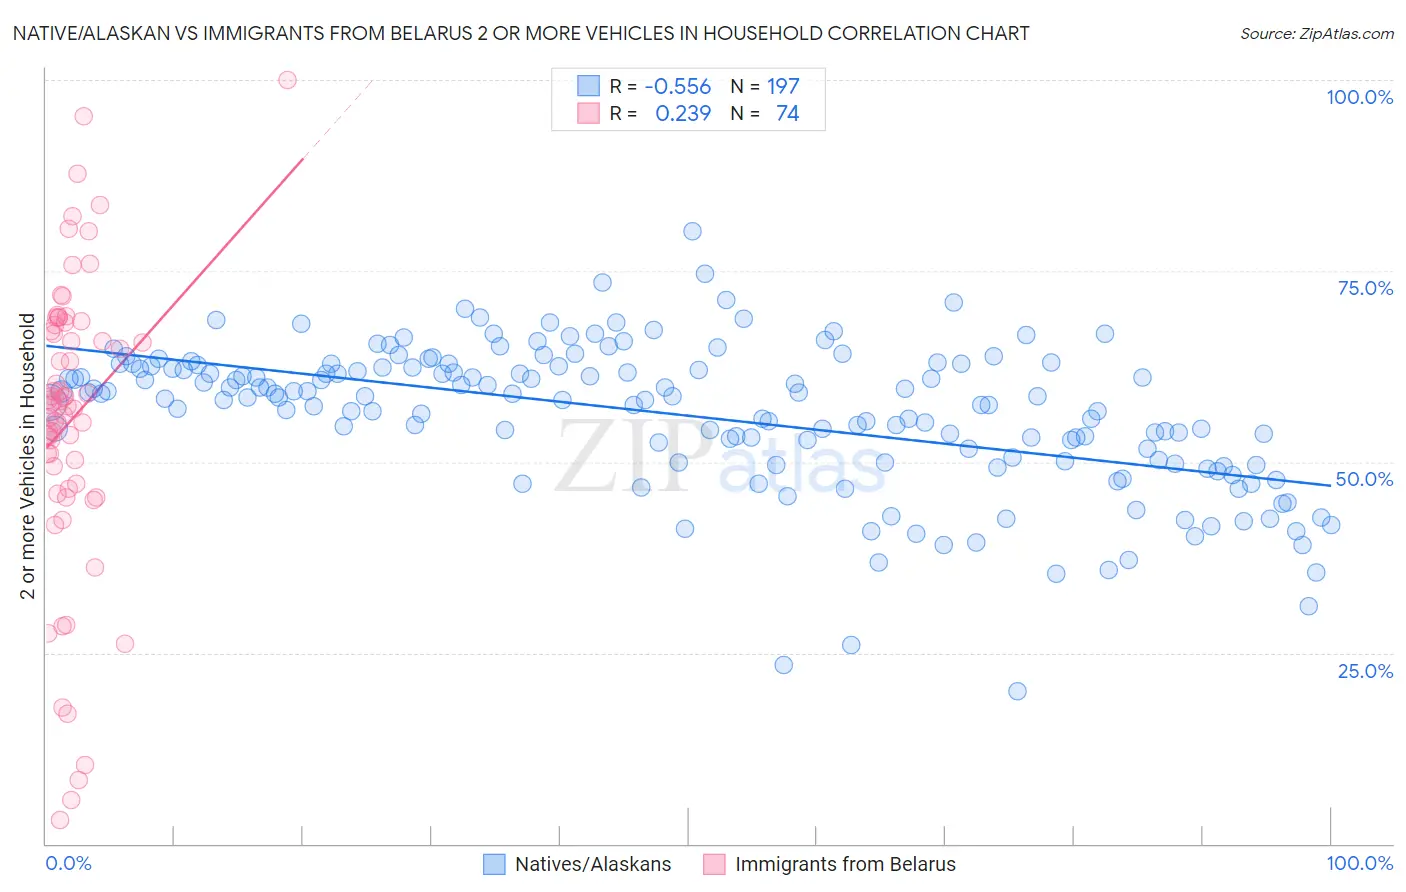 Native/Alaskan vs Immigrants from Belarus 2 or more Vehicles in Household